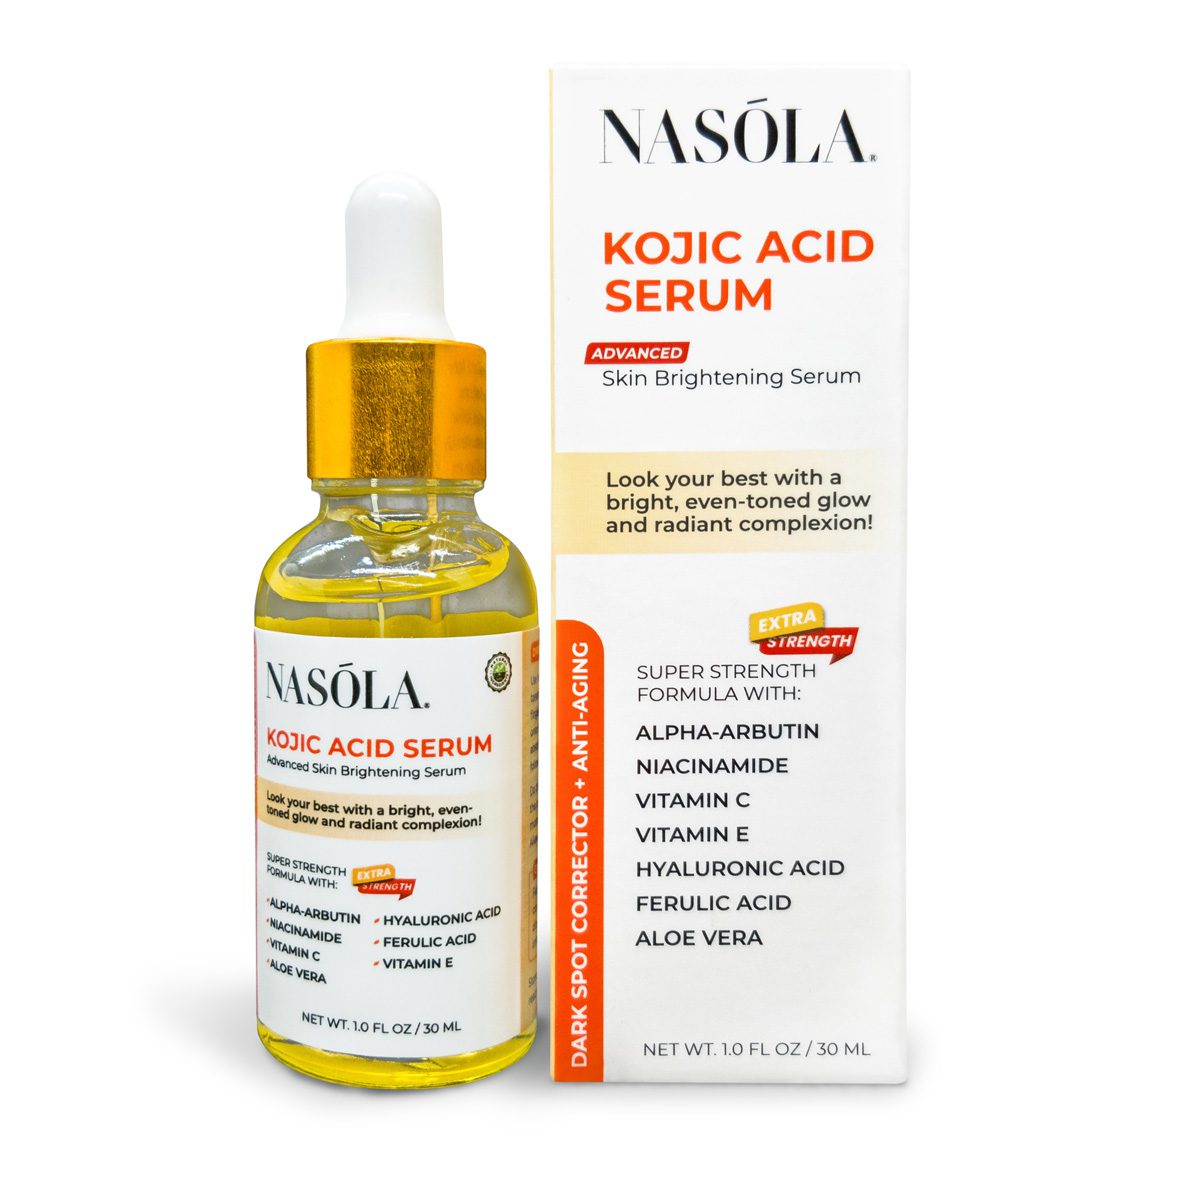 Nasola Kojic Acid Serum